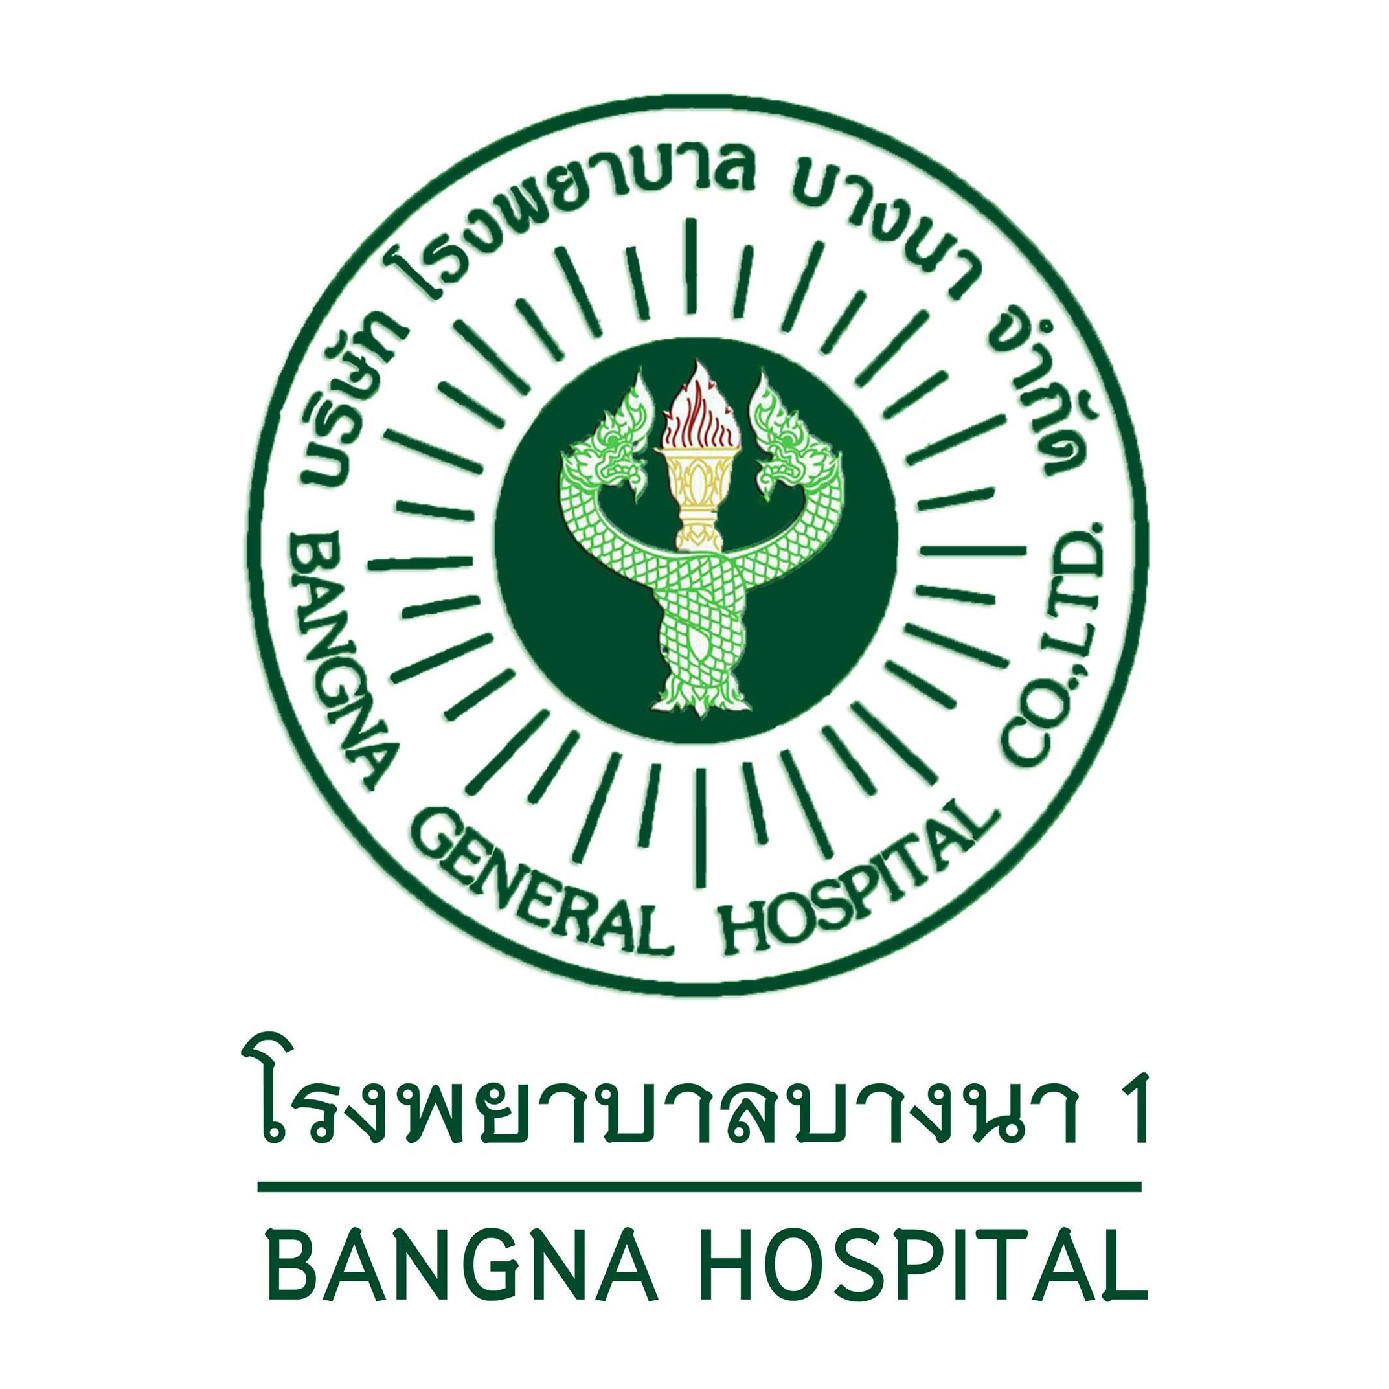 Bangna1 Hospital 01